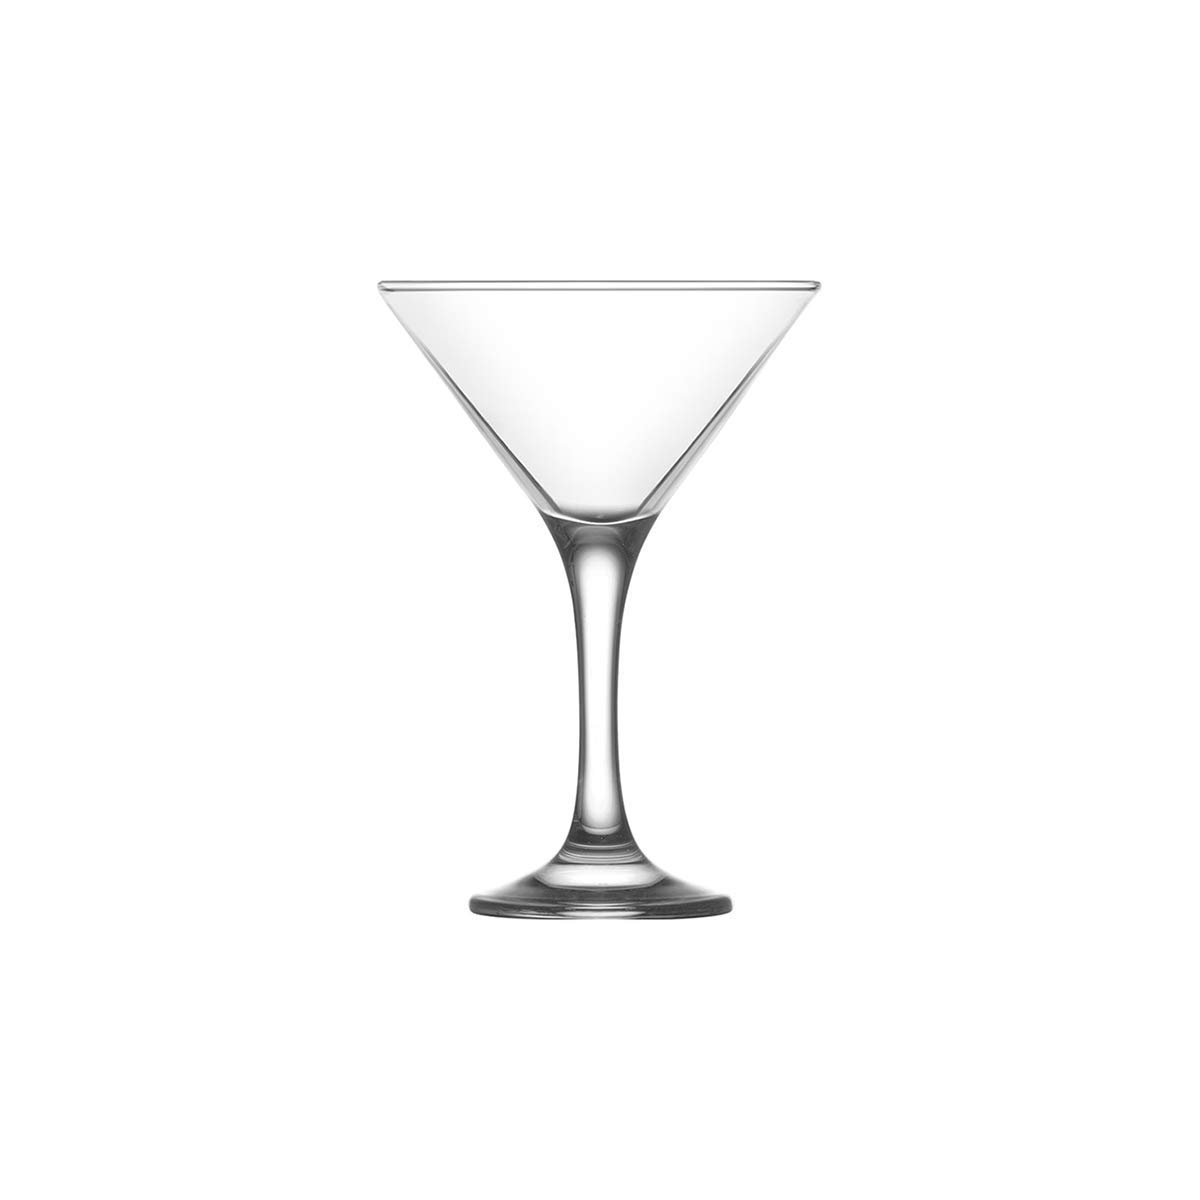 Gurallar MIS507 Misket Martini Glass 2-1/4 Oz, 4-3/8 Inch High, Case of 24